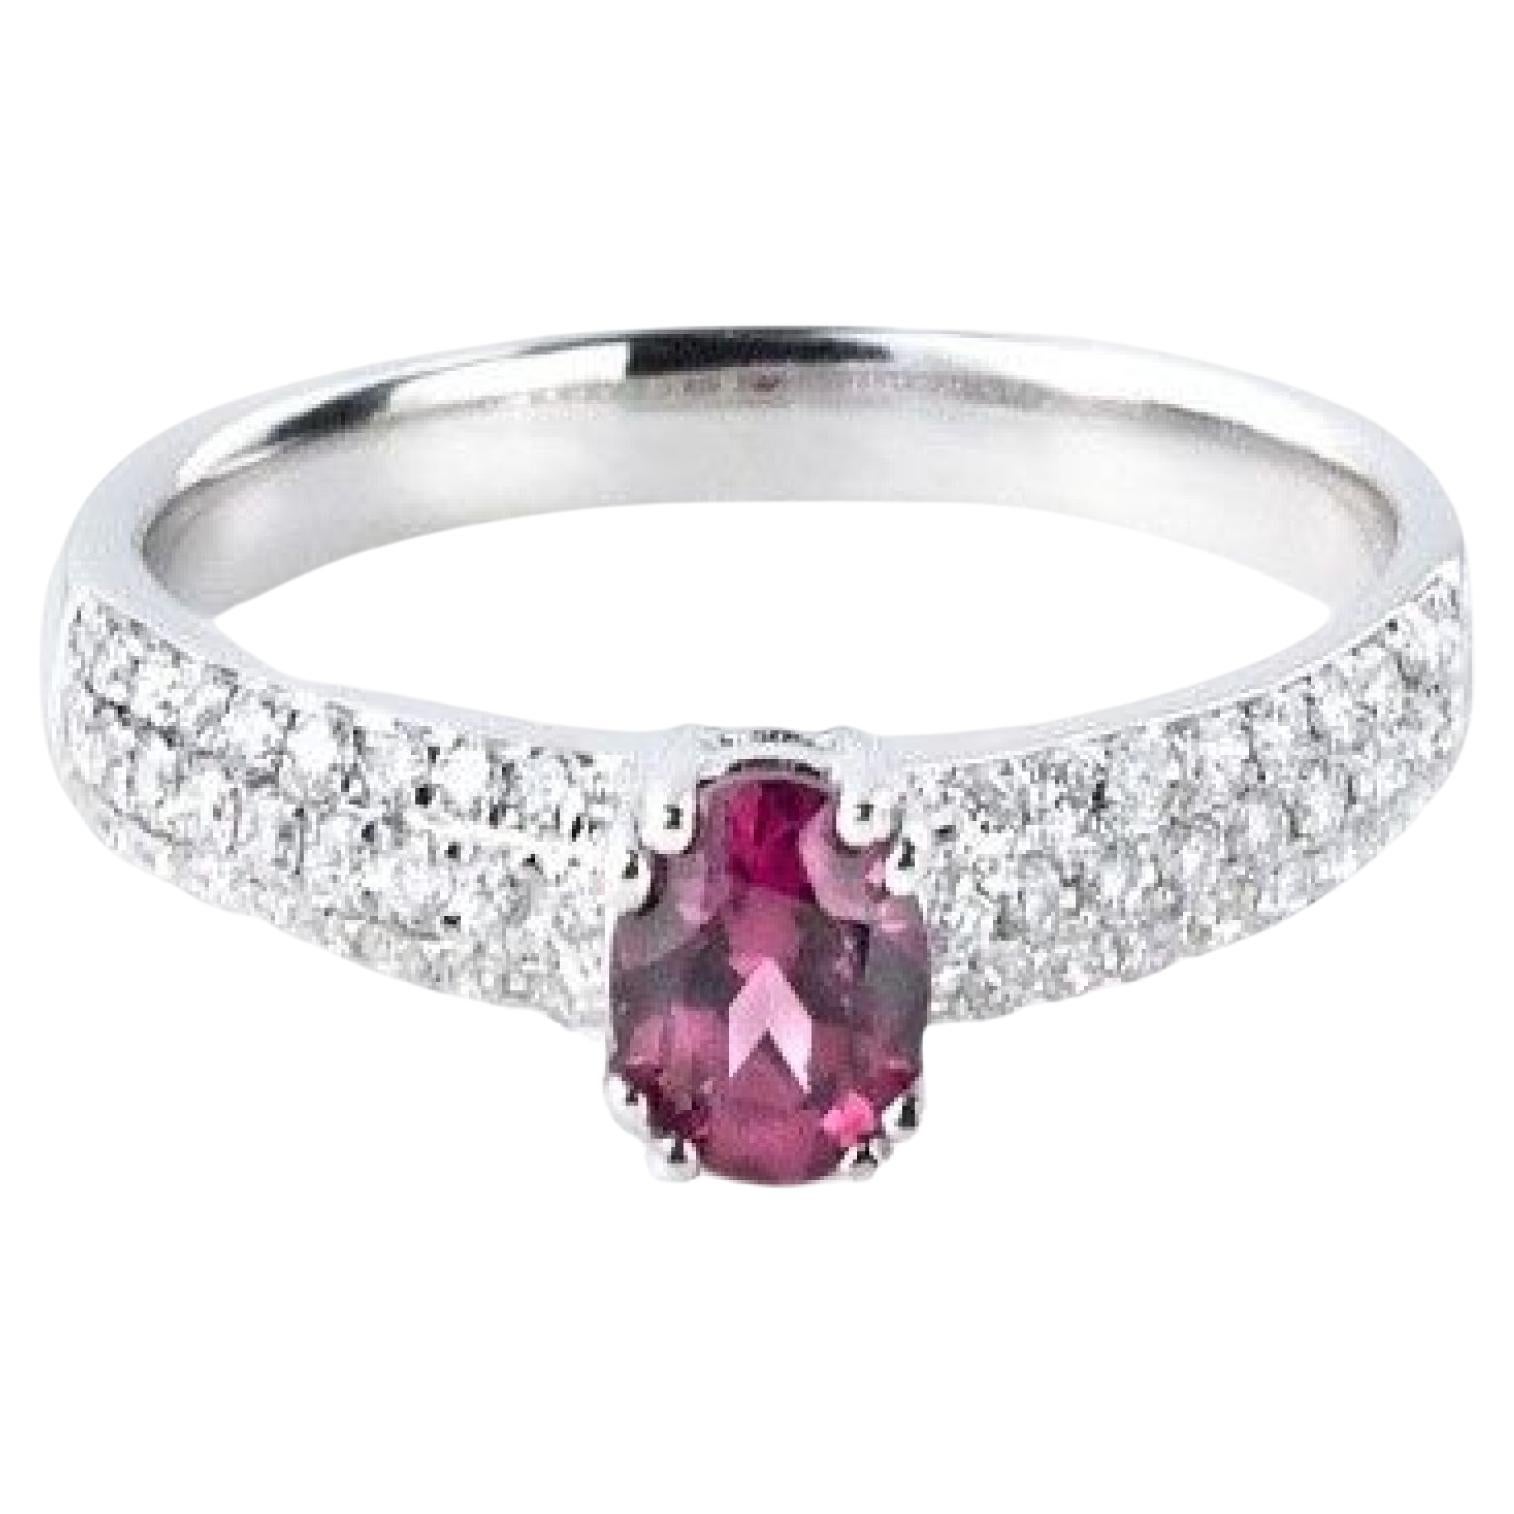 For Sale:  0.337 Carat Pink Tourmaline and Diamond Ring in 14 Karat White Gold